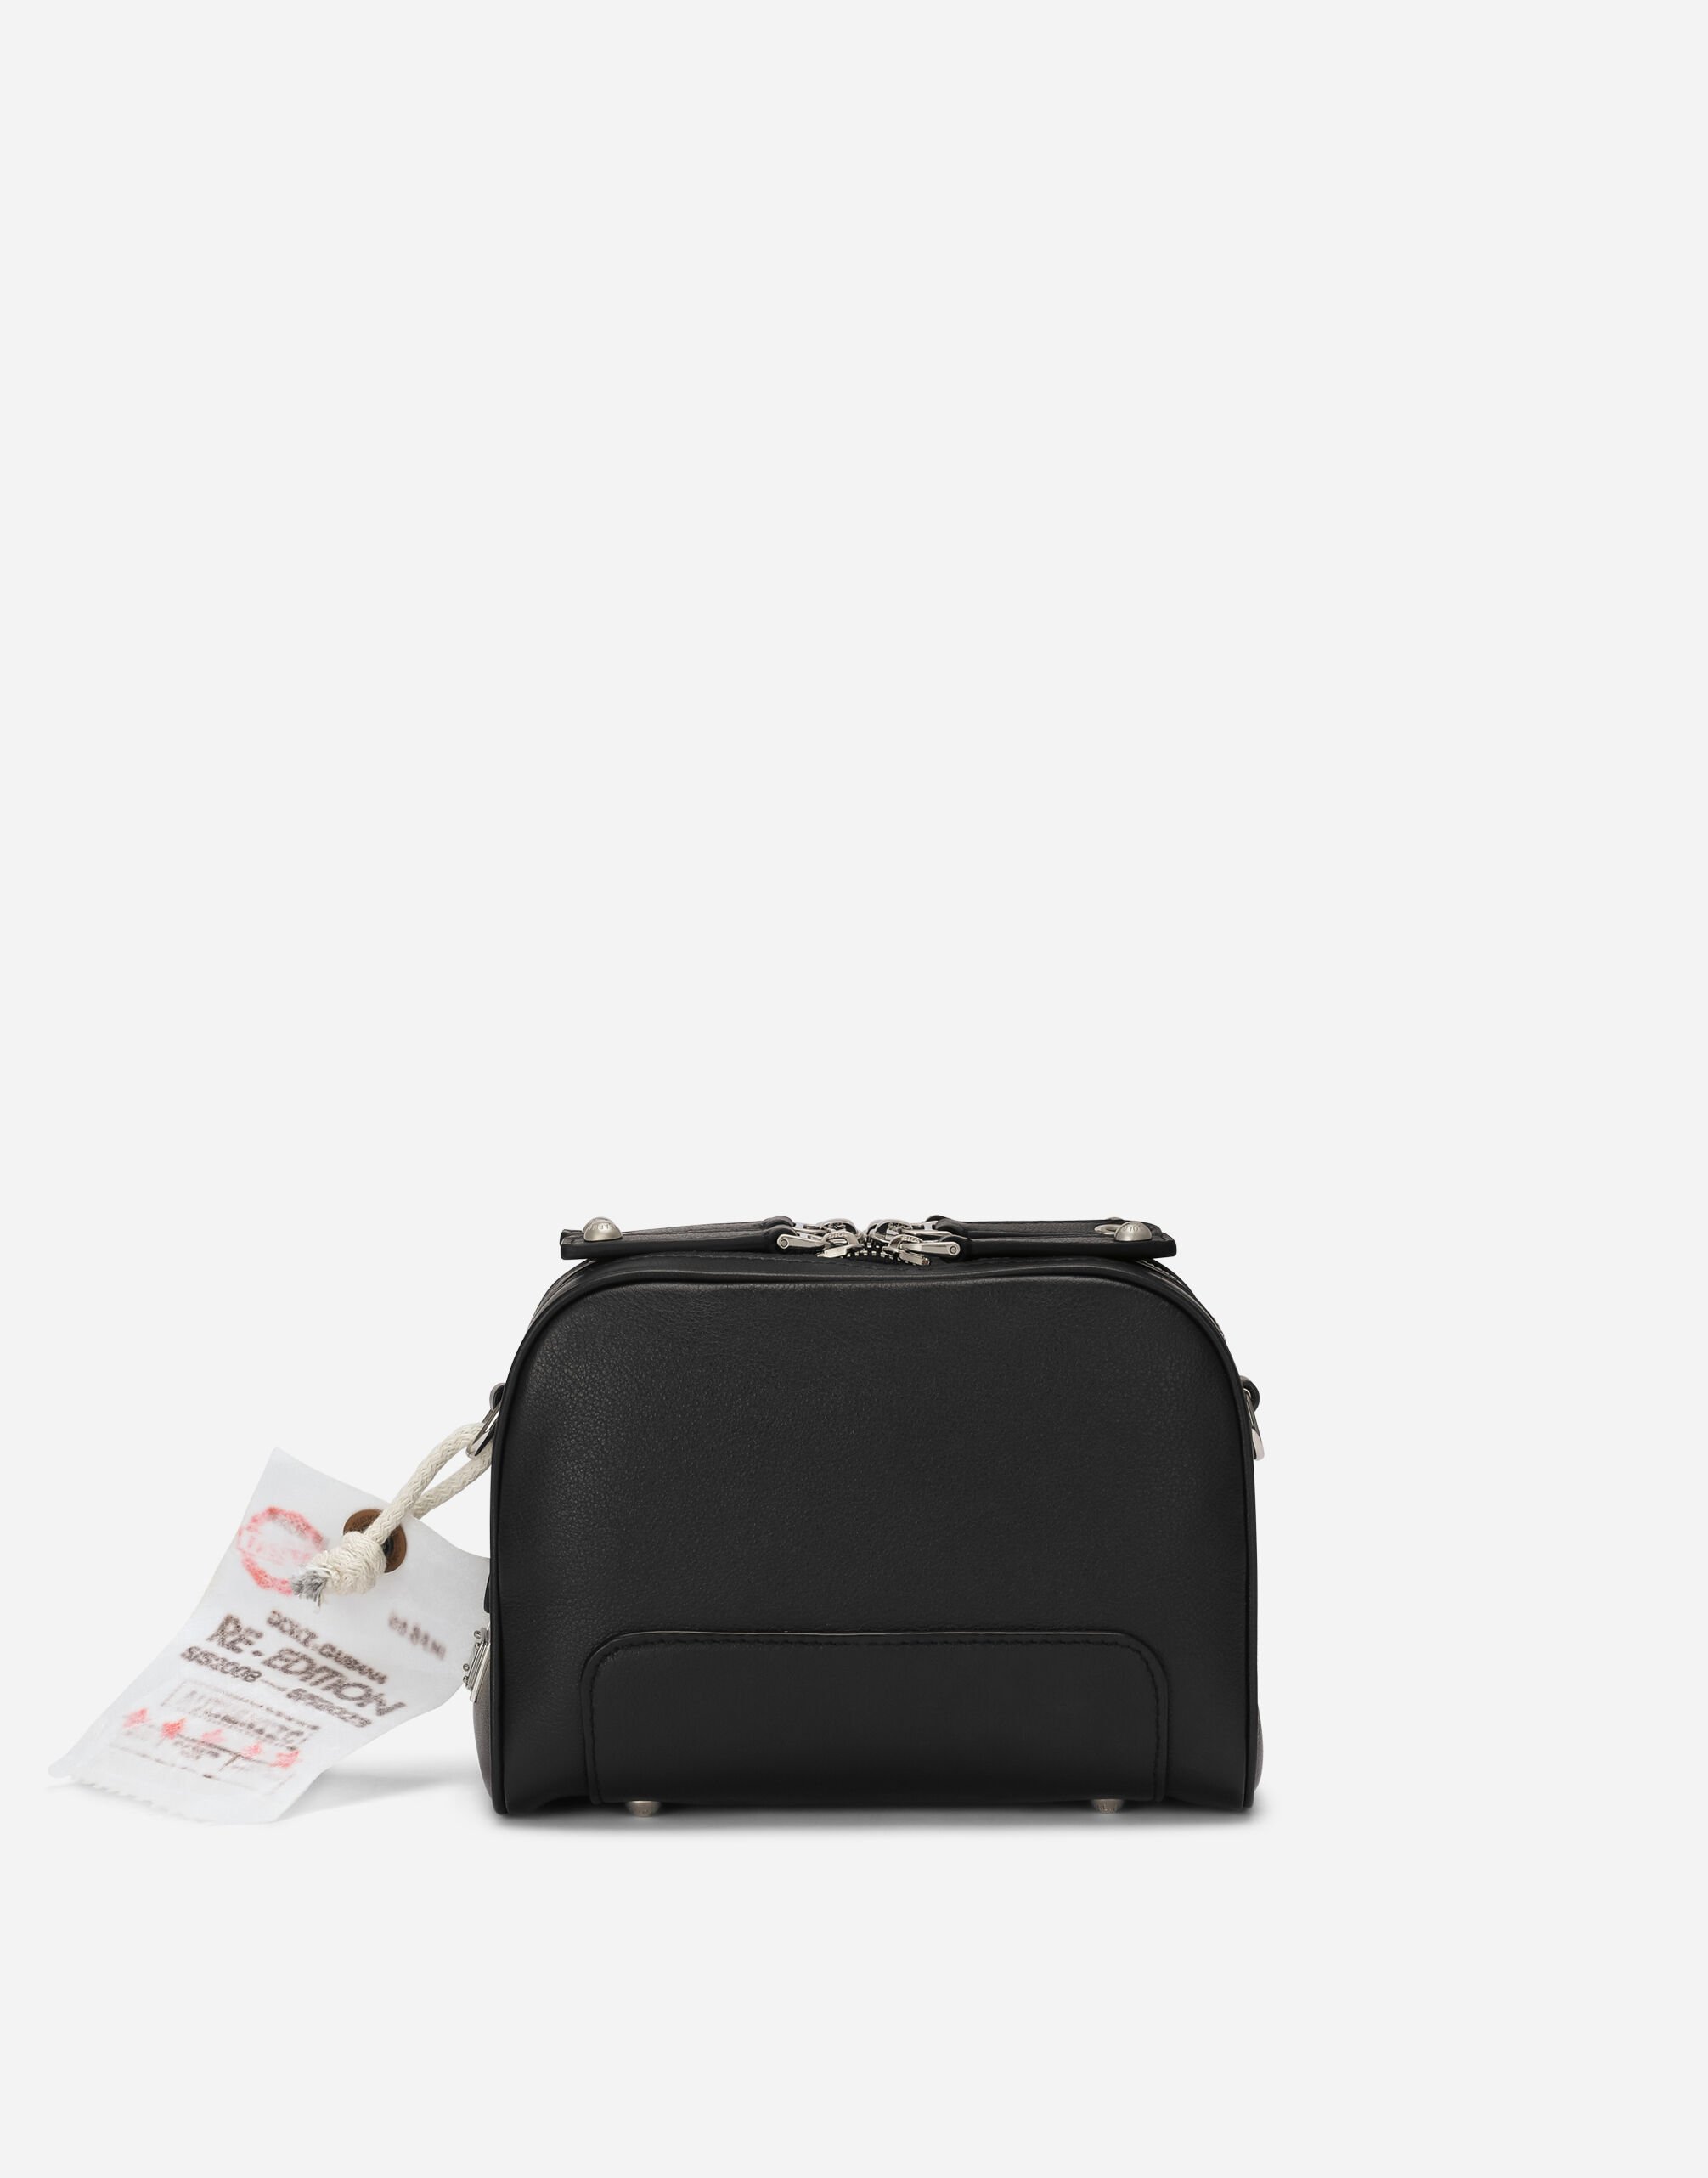 Dolce & Gabbana Calfskin toiletry bag Black BP0330AT489